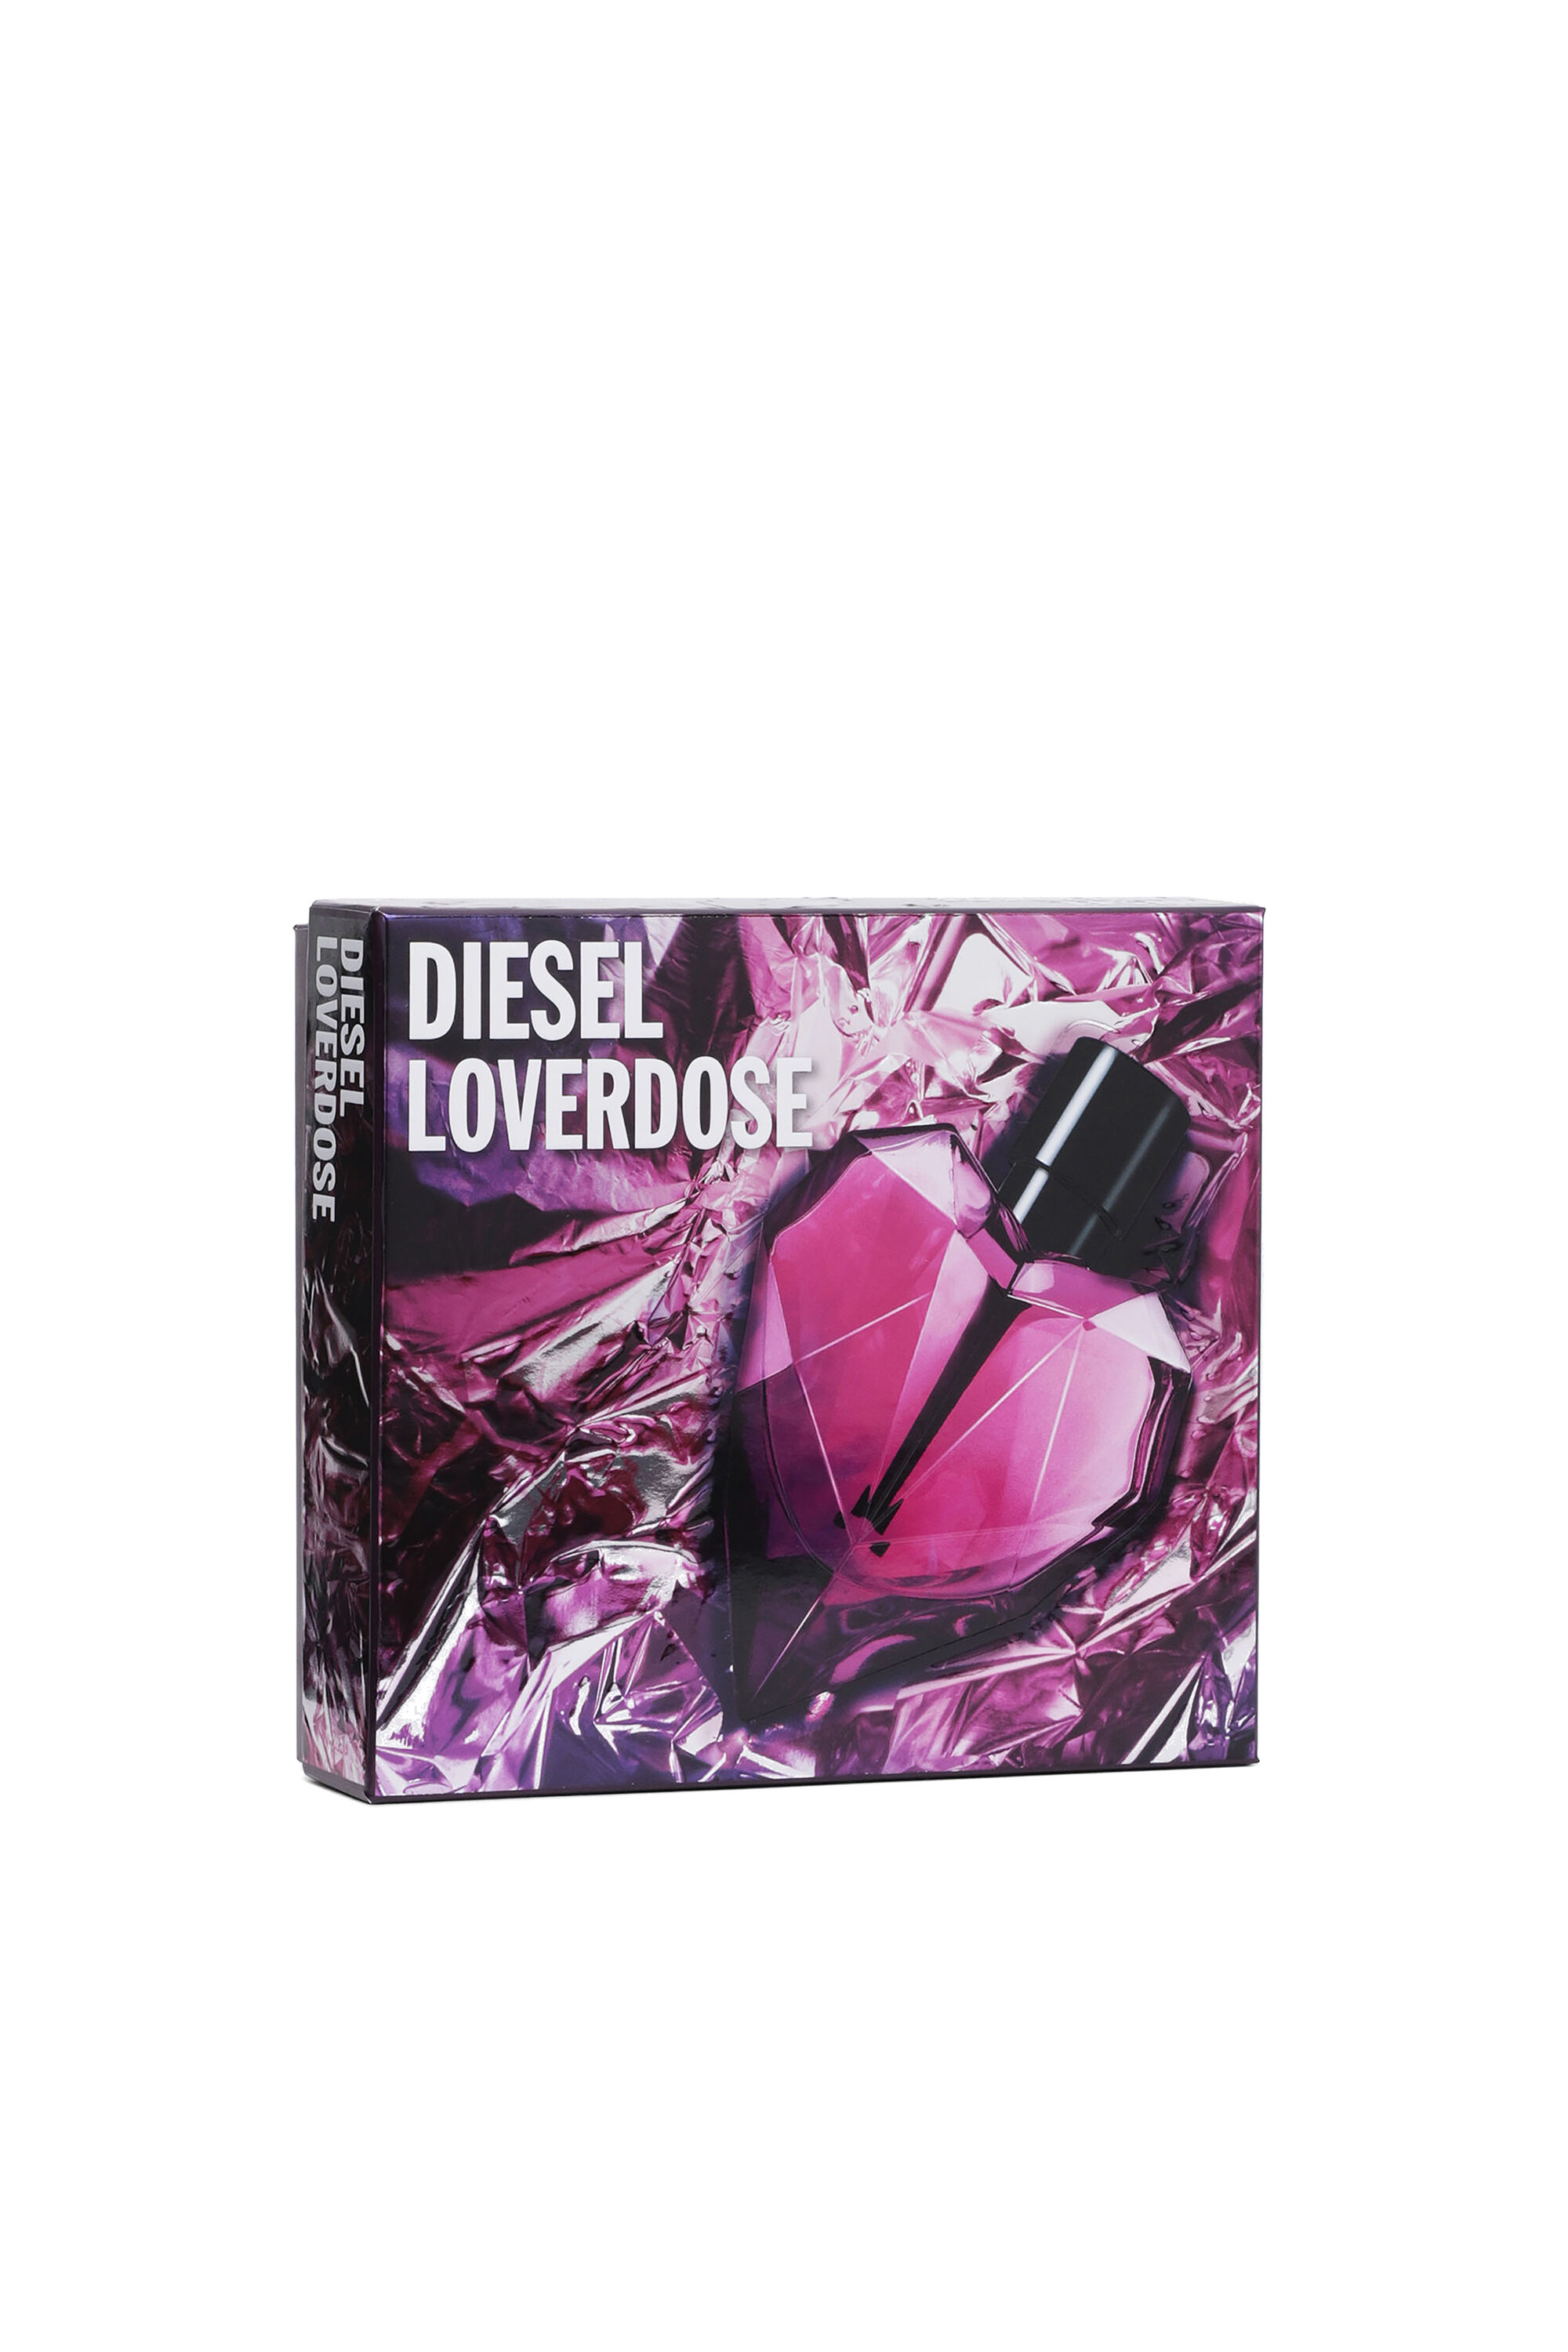 Diesel - LOVERDOSE 30ML GIFT SET,  - Image 1